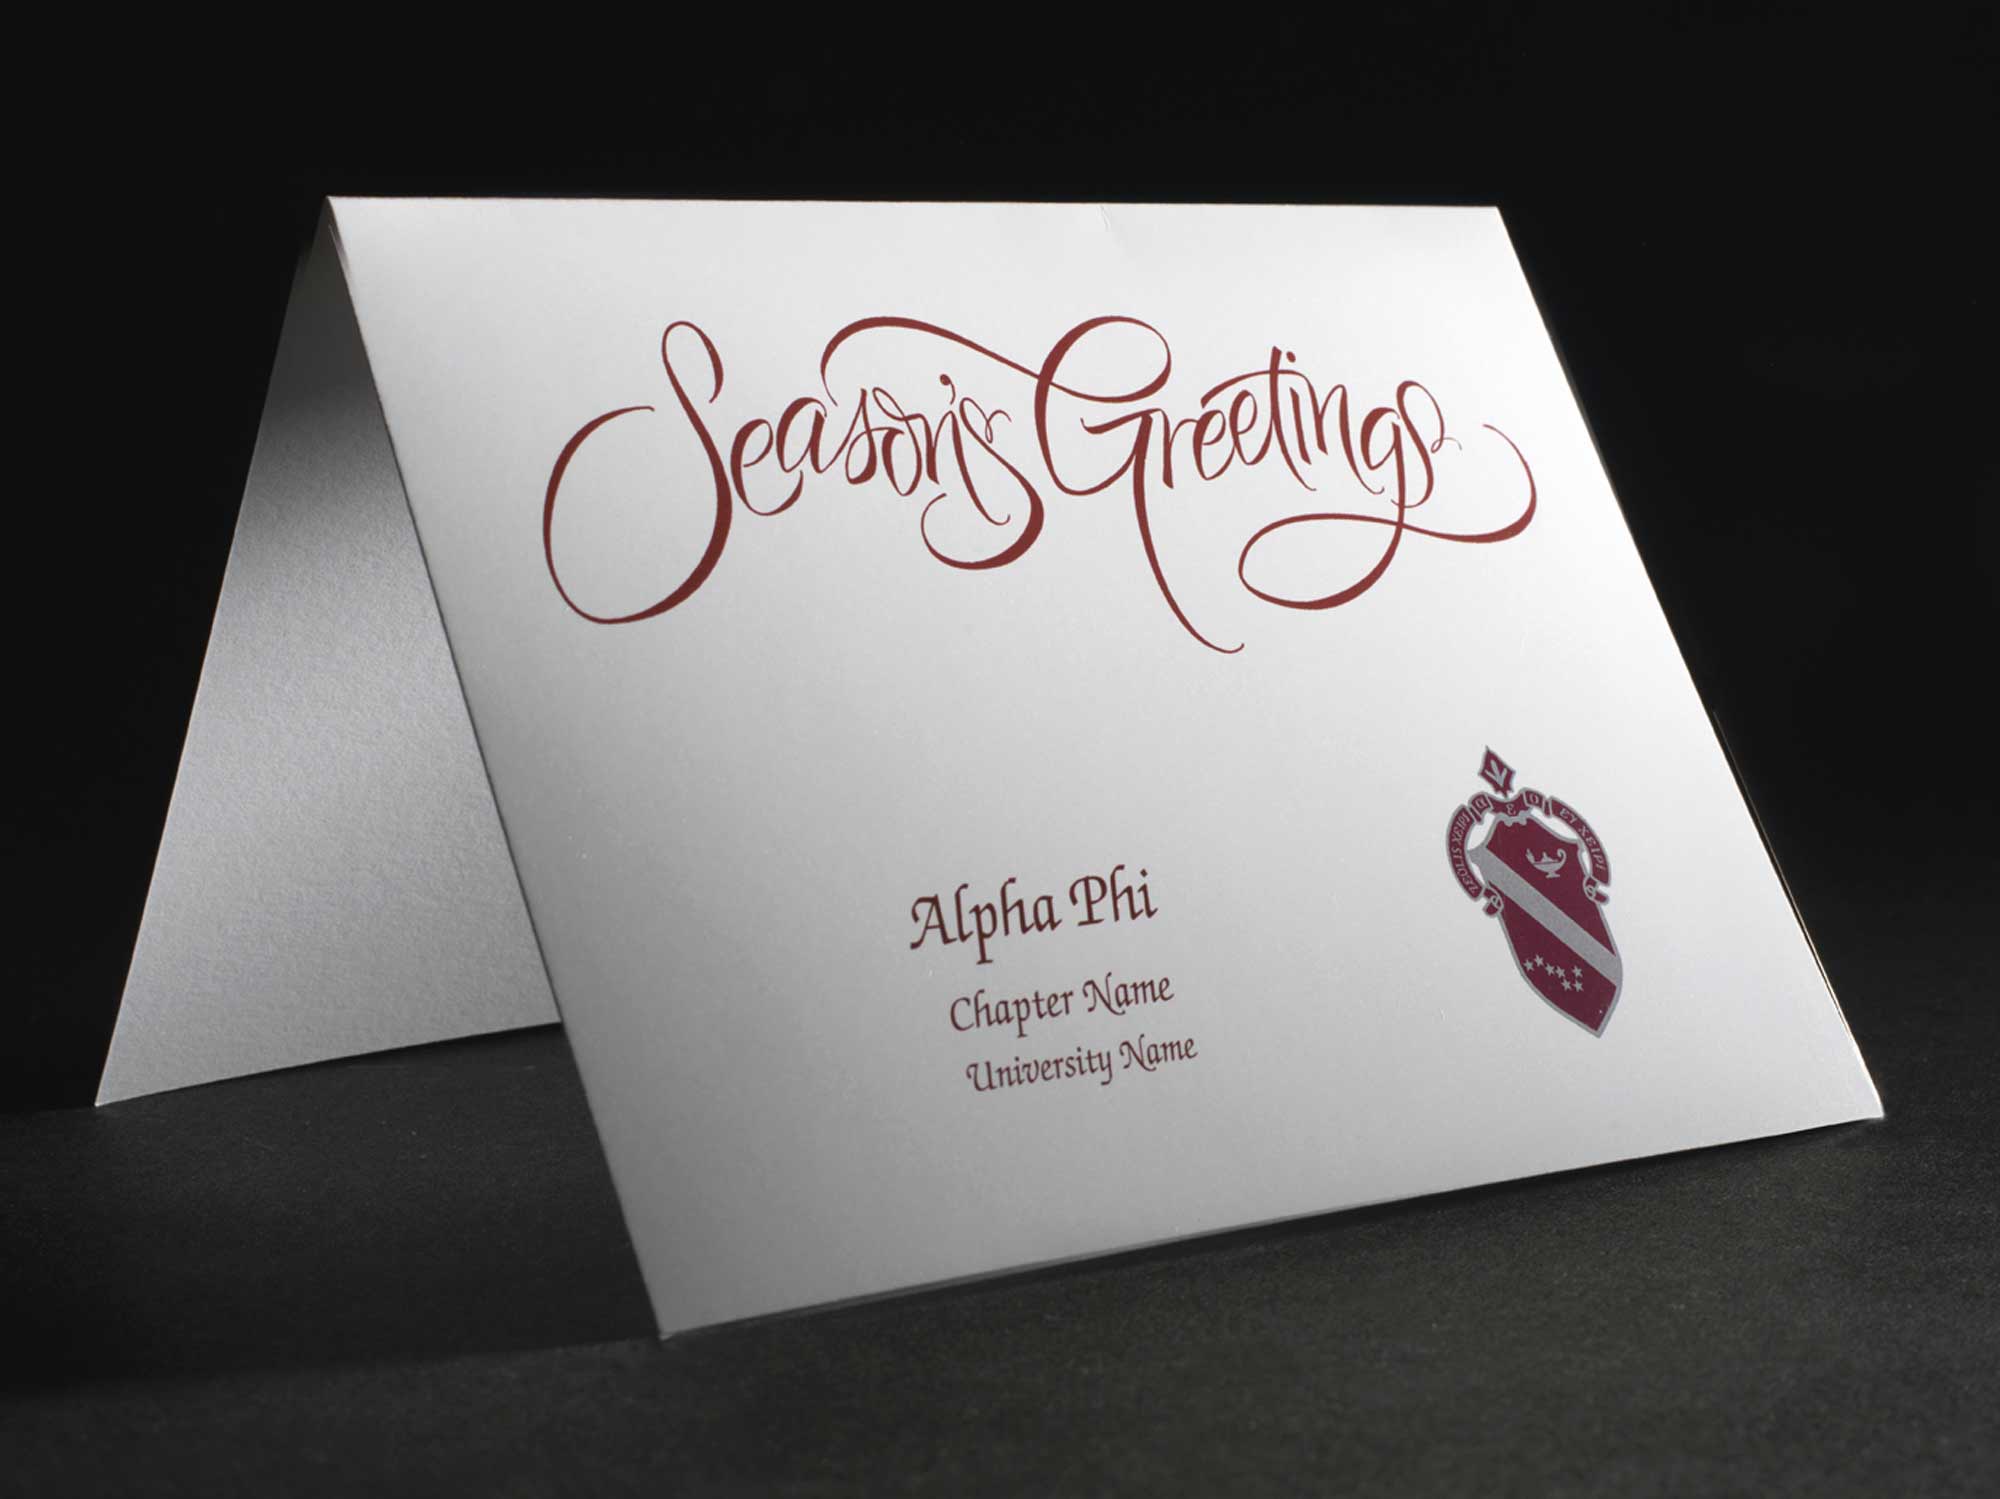 Seasons Greetings Cards Alpha Phi